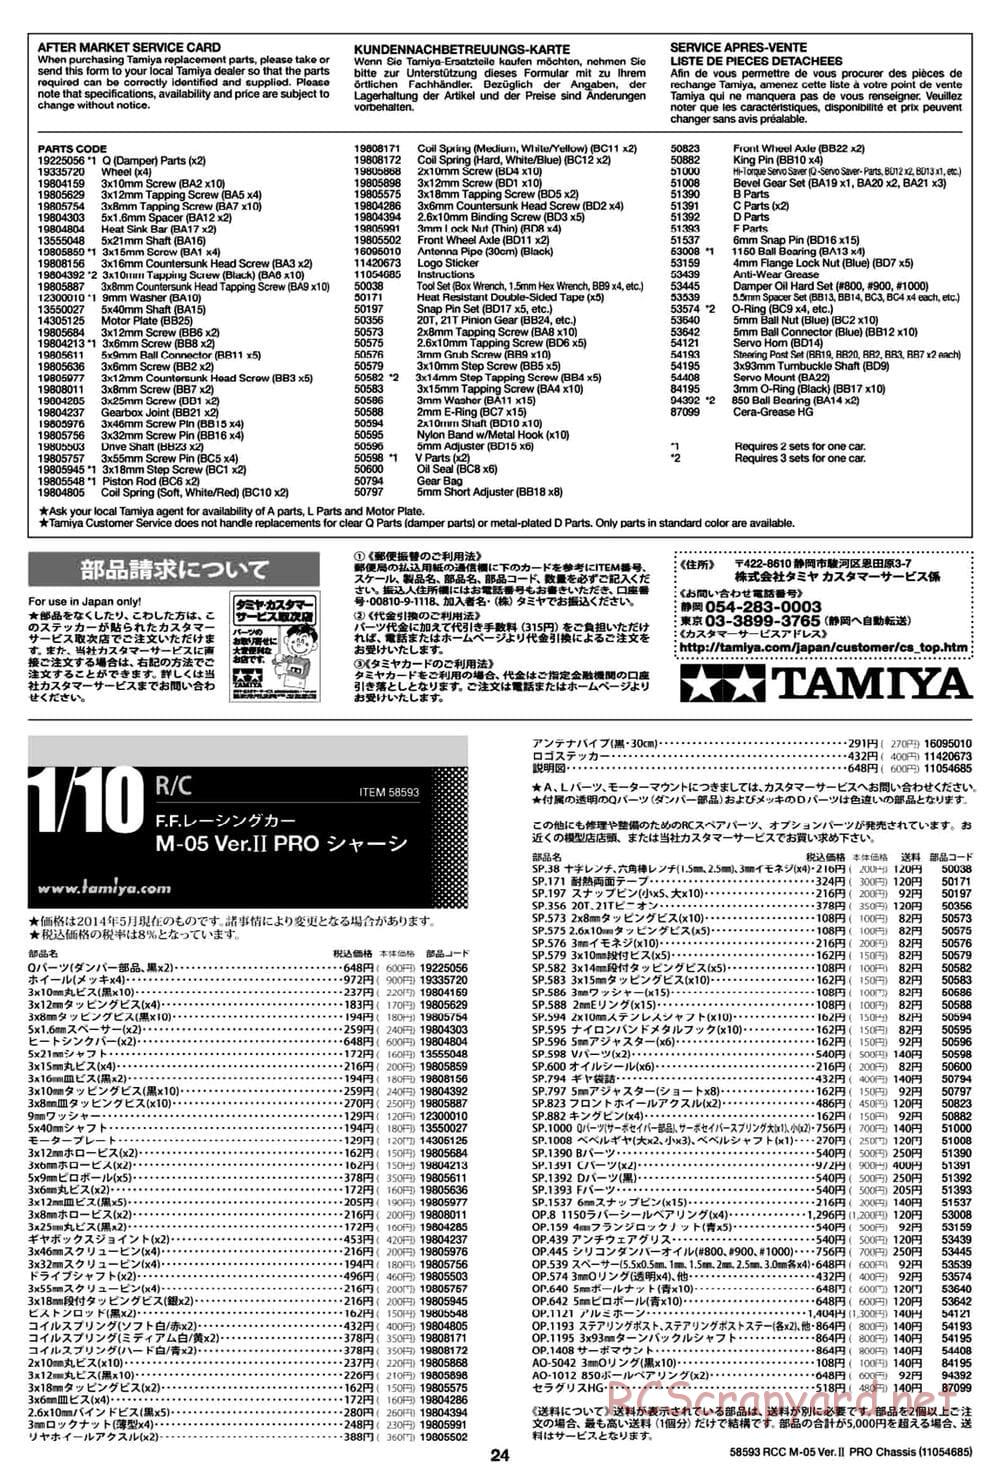 Tamiya - M-05 Ver.II Pro Chassis - Manual - Page 24